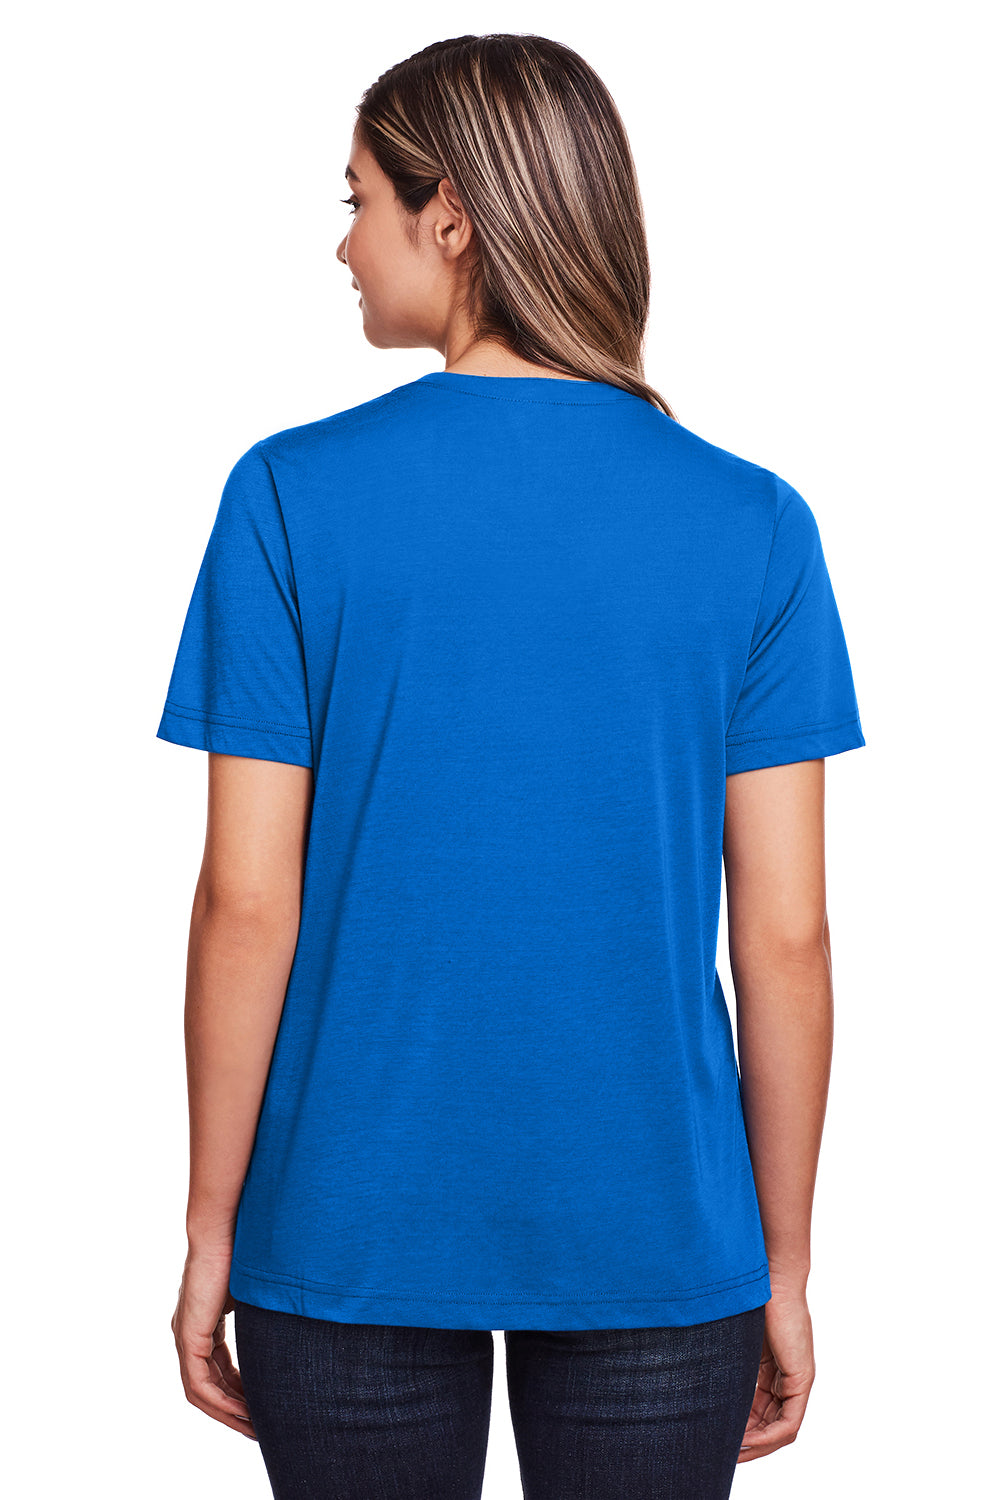 Core 365 CE111W Womens Fusion ChromaSoft Performance Moisture Wicking Short Sleeve Scoop Neck T-Shirt Royal Blue Back